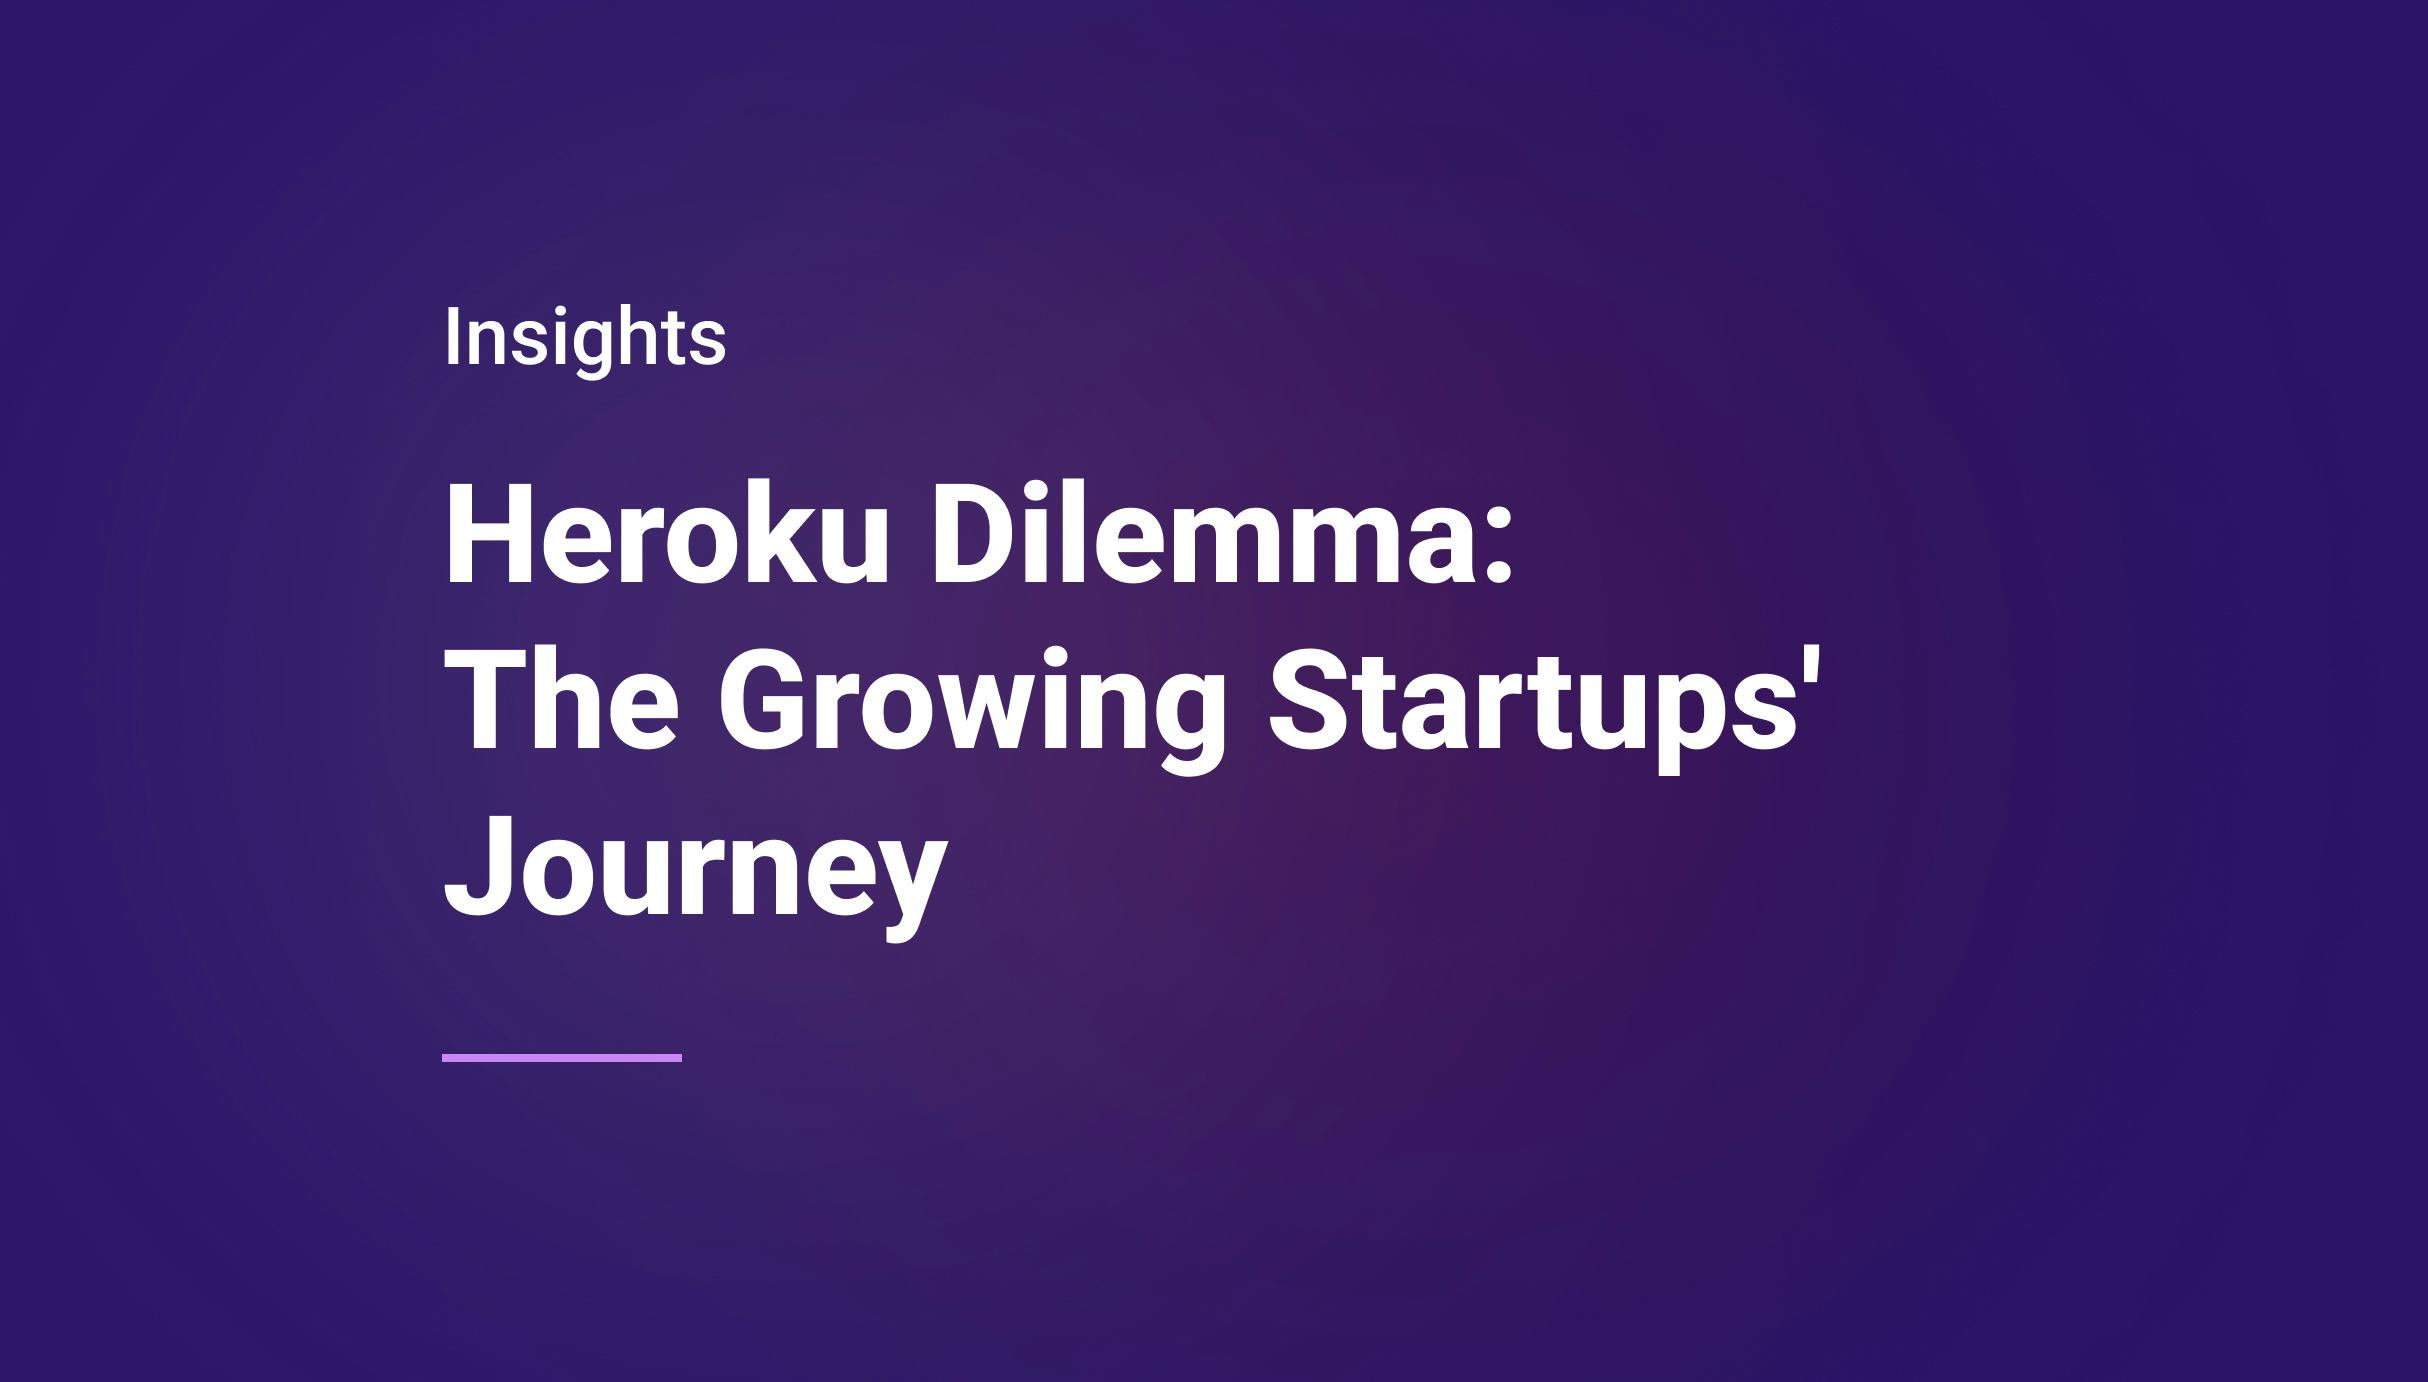 Heroku Dilemma: The Growing Startups' Journey